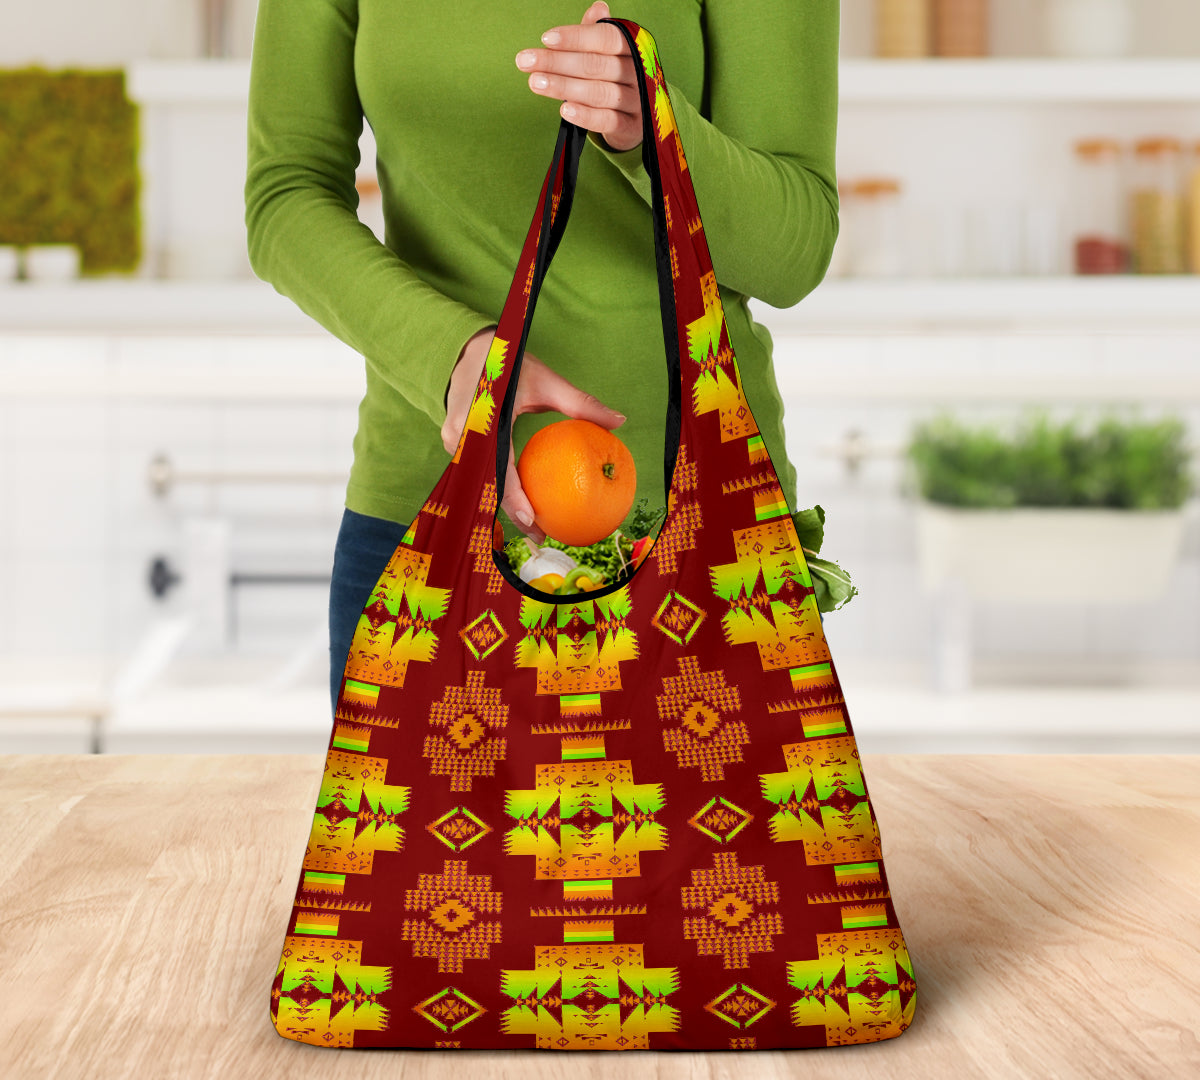 Powwow Storepattern grocery bag 3 pack set 40